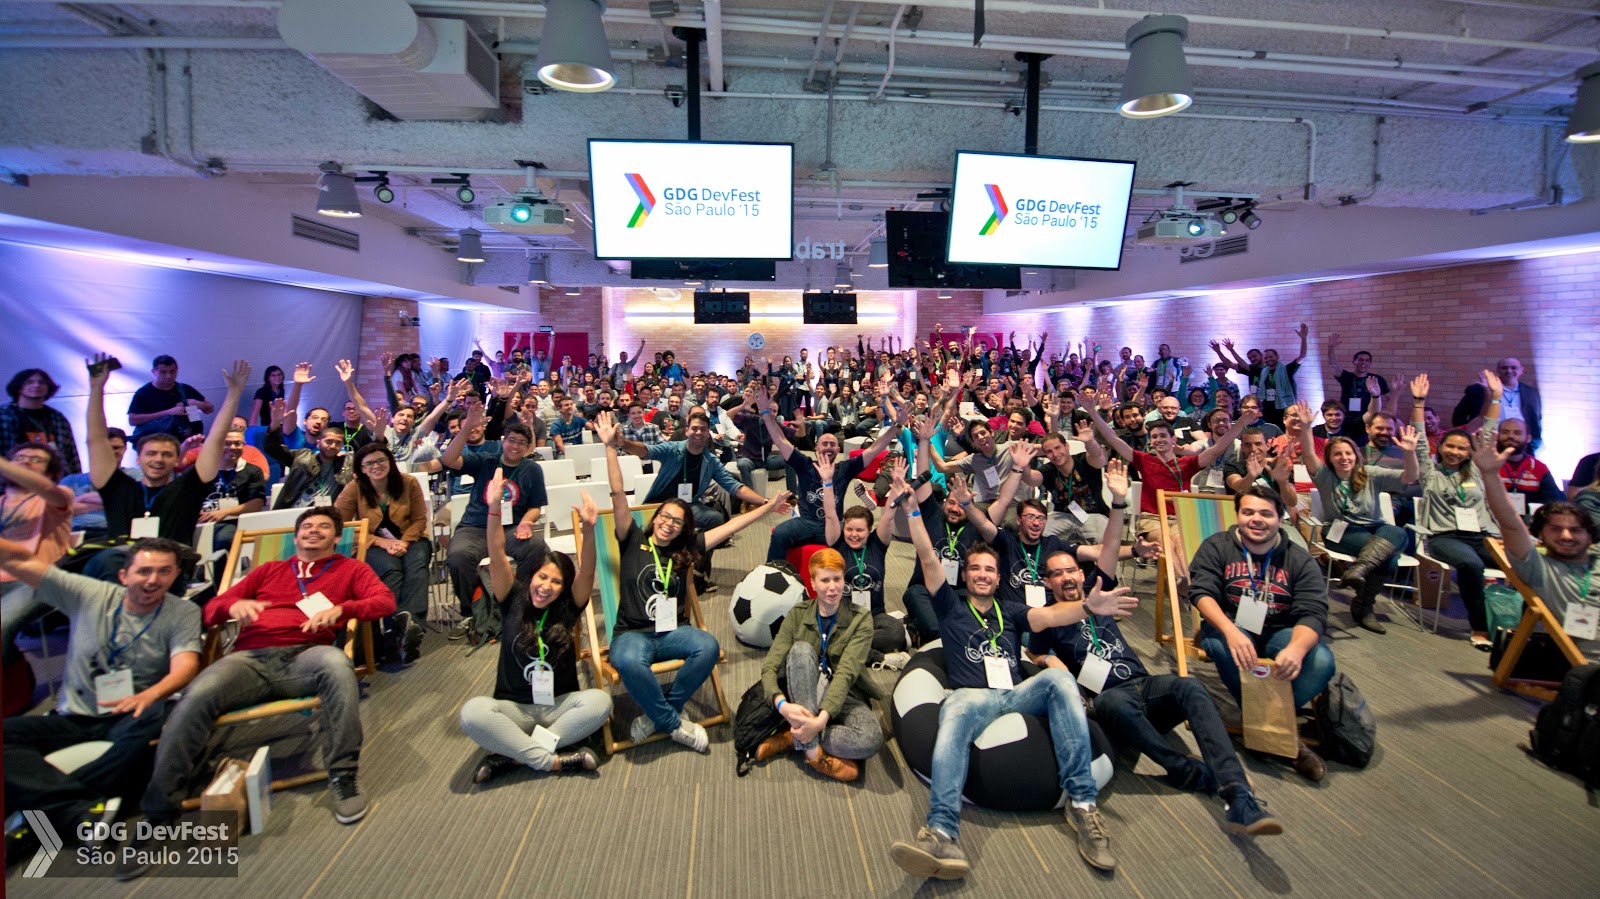 DevFest São Paulo 2015 at Google&#x27;s office in São Paulo